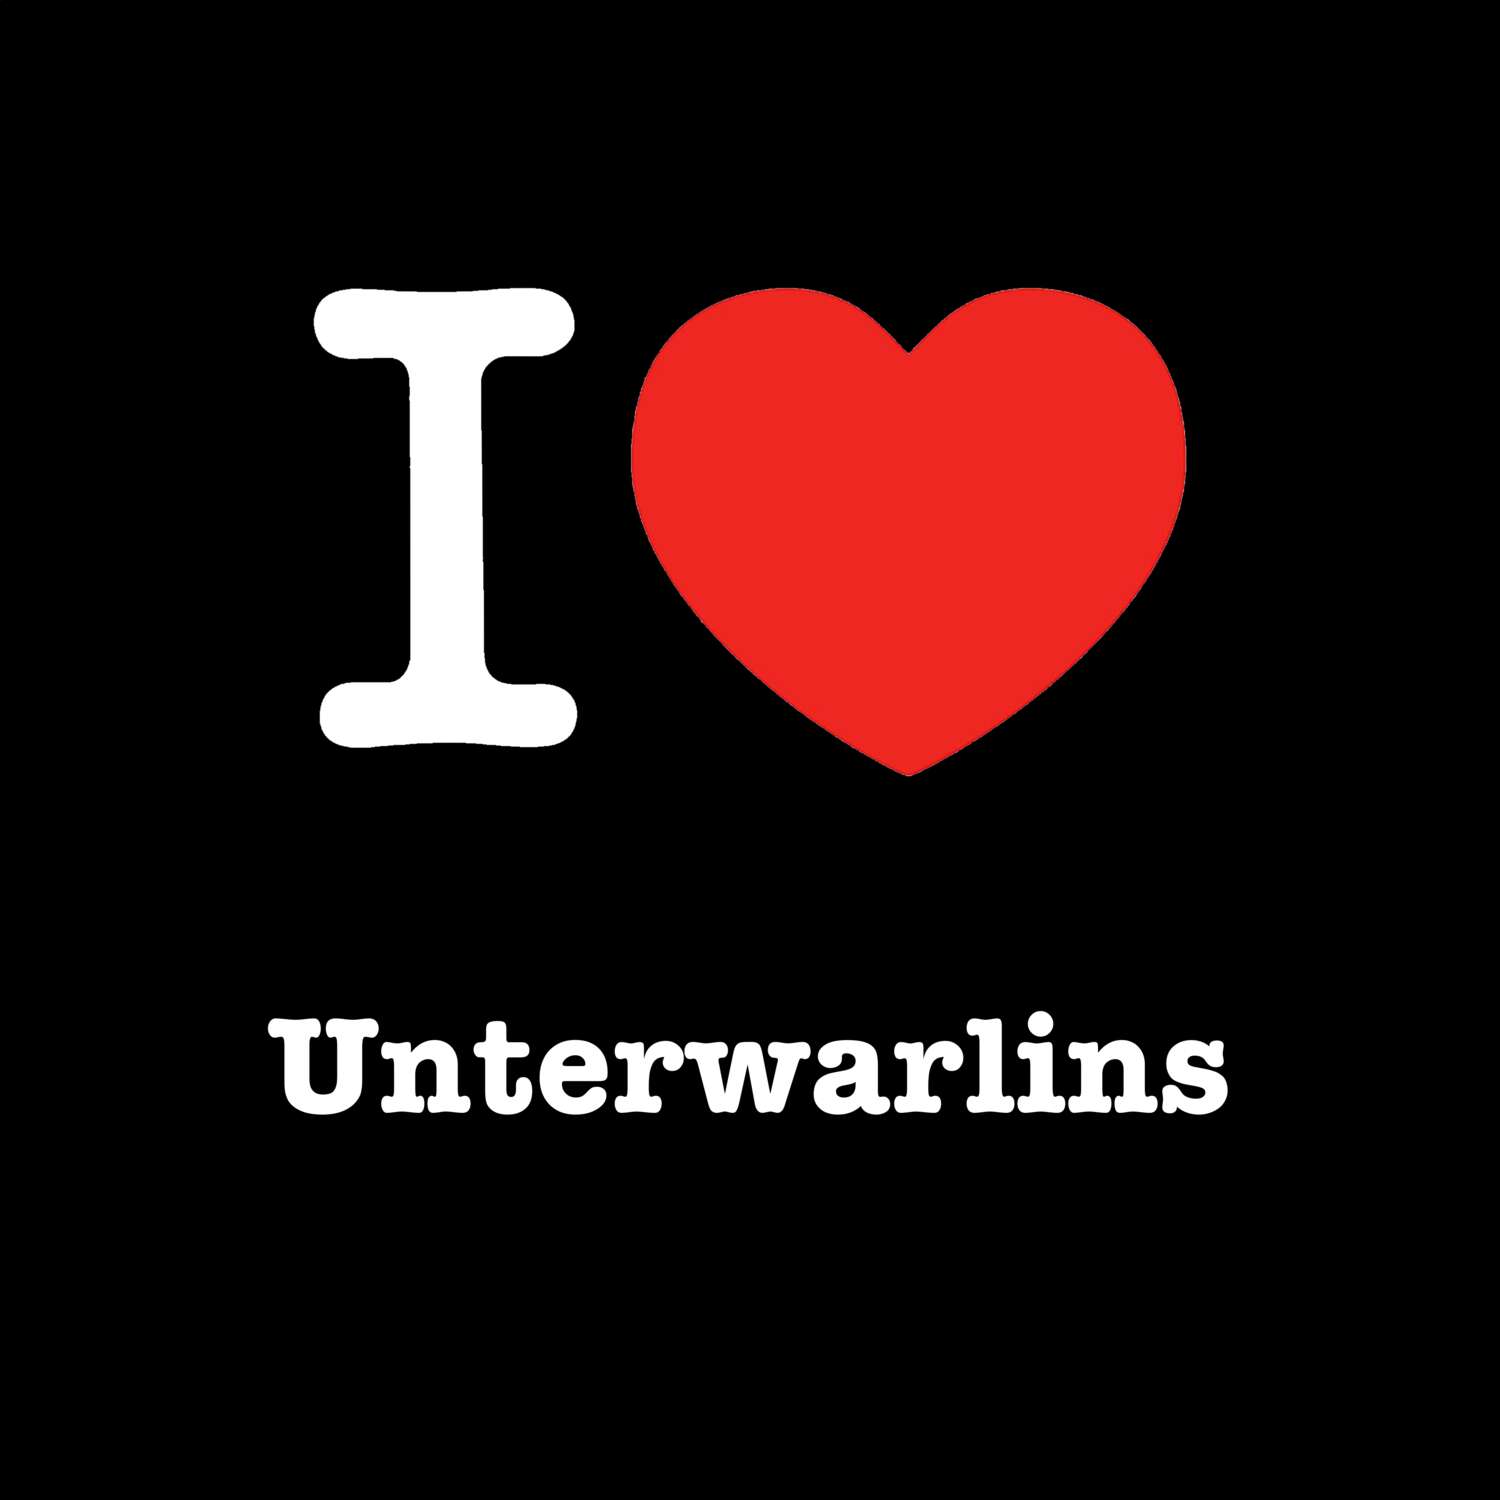 Unterwarlins T-Shirt »I love«